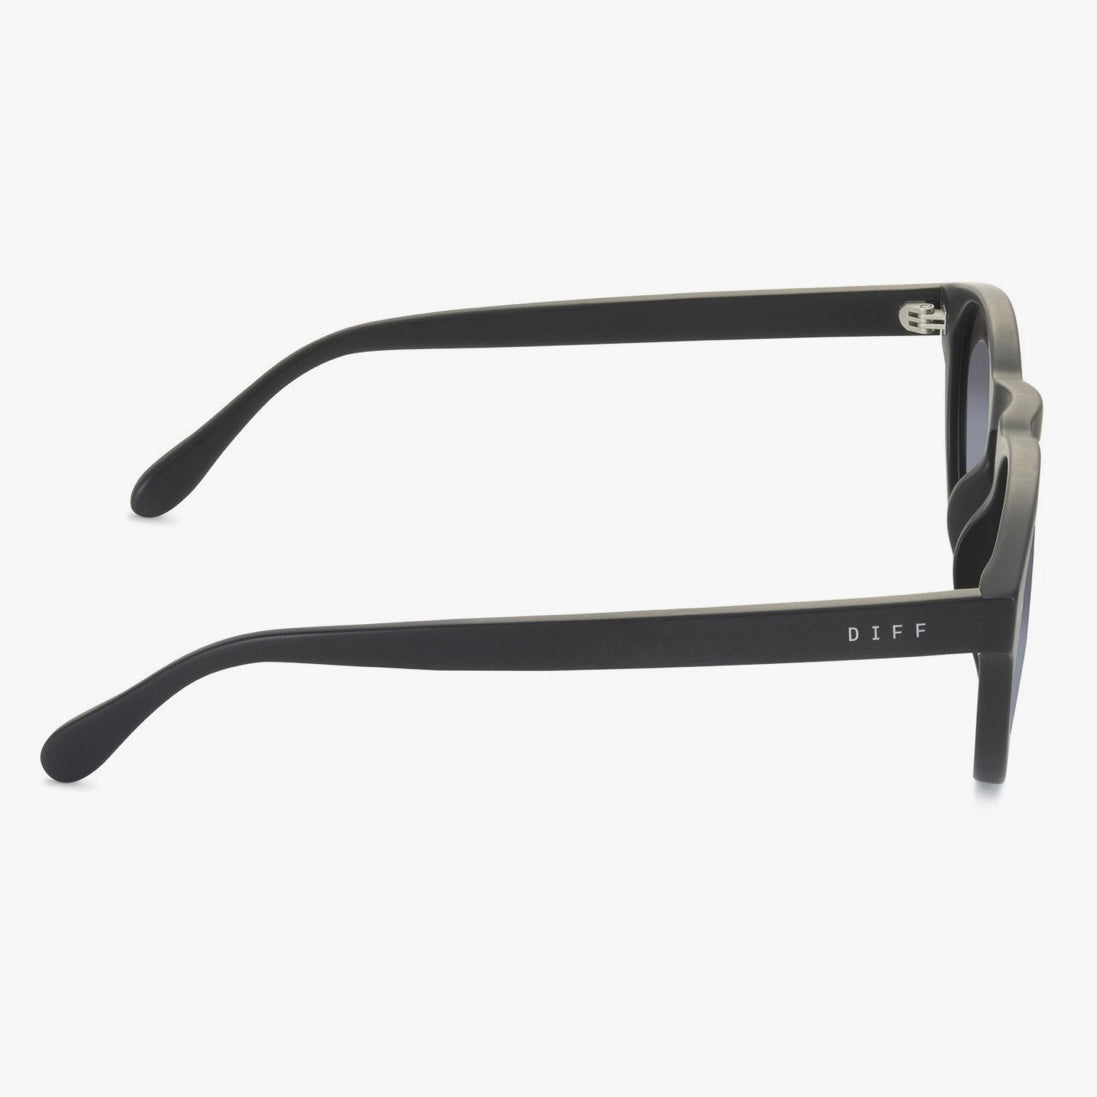 DIFF Cody Matte Black + Blue Gradient Flash Lens Sunglasses